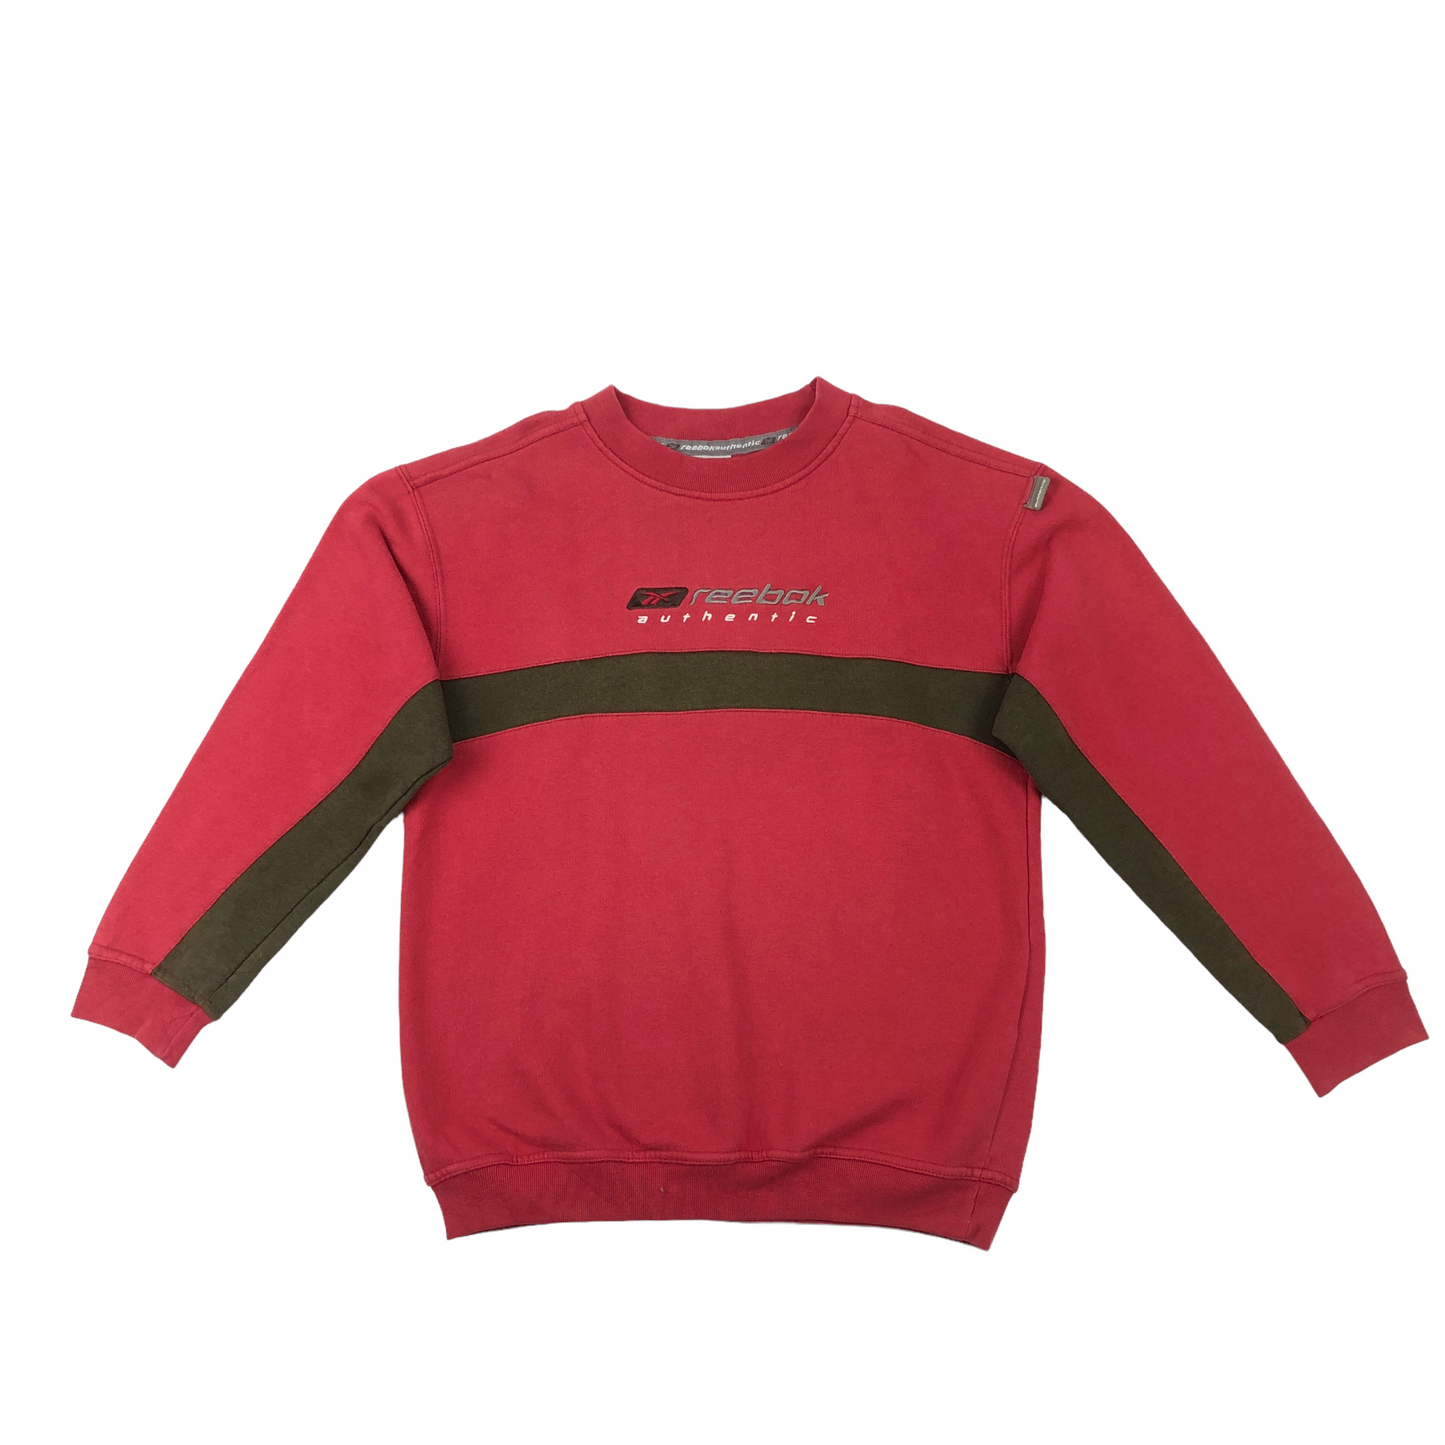 Vintage 90's Reebok Sweatshirt (8-10yrs)